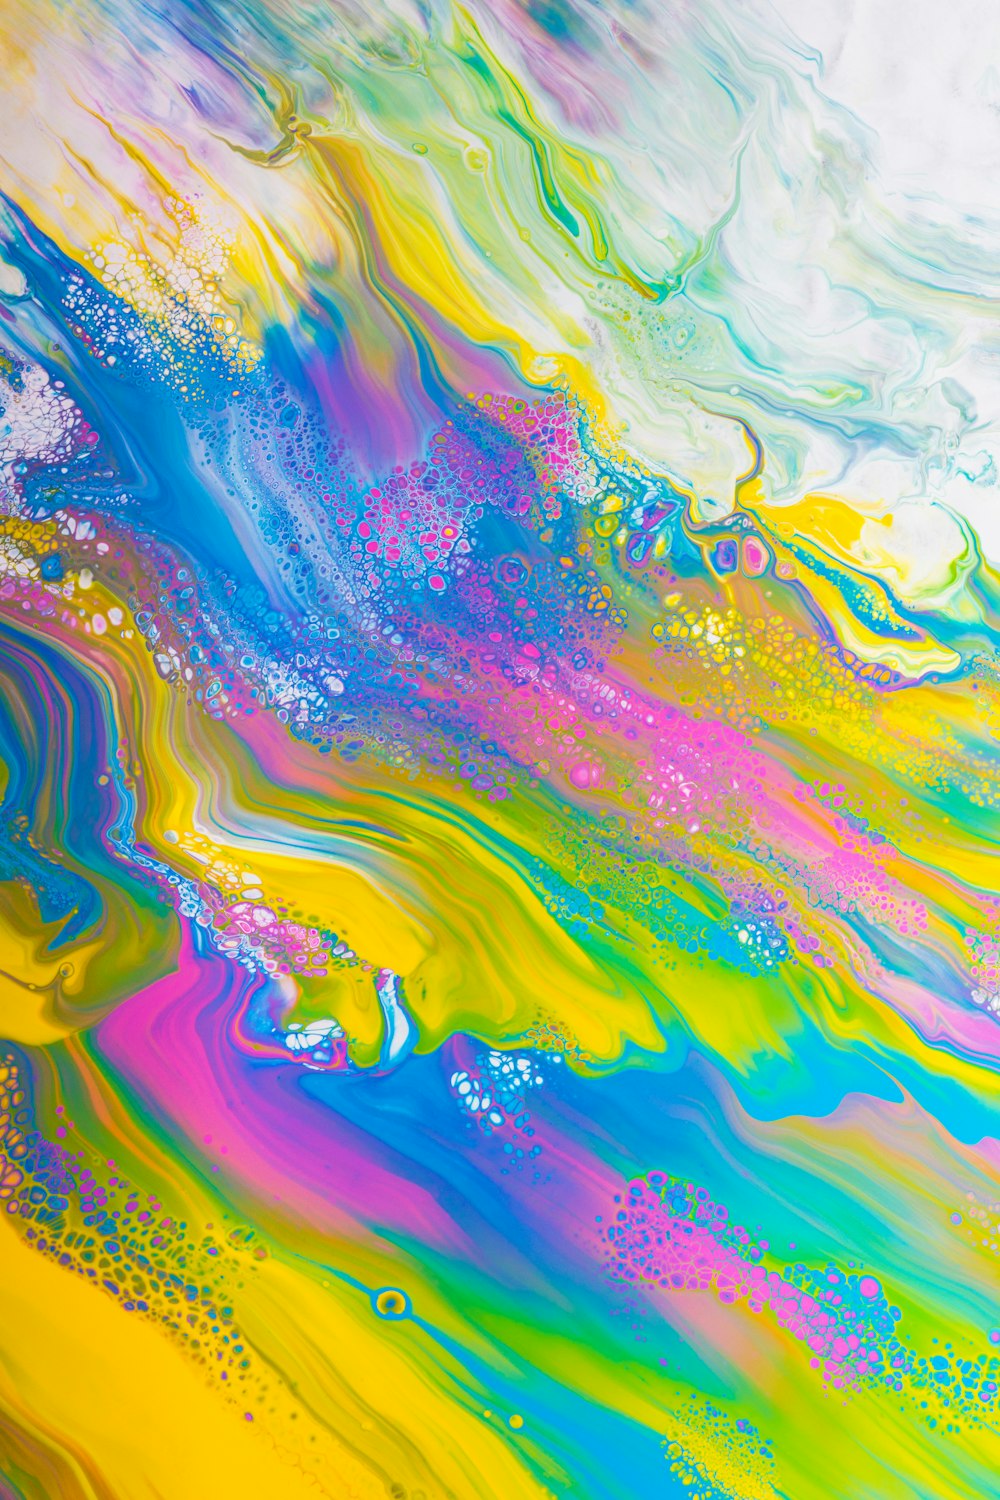 Une peinture abstraite avec une peinture multicolore